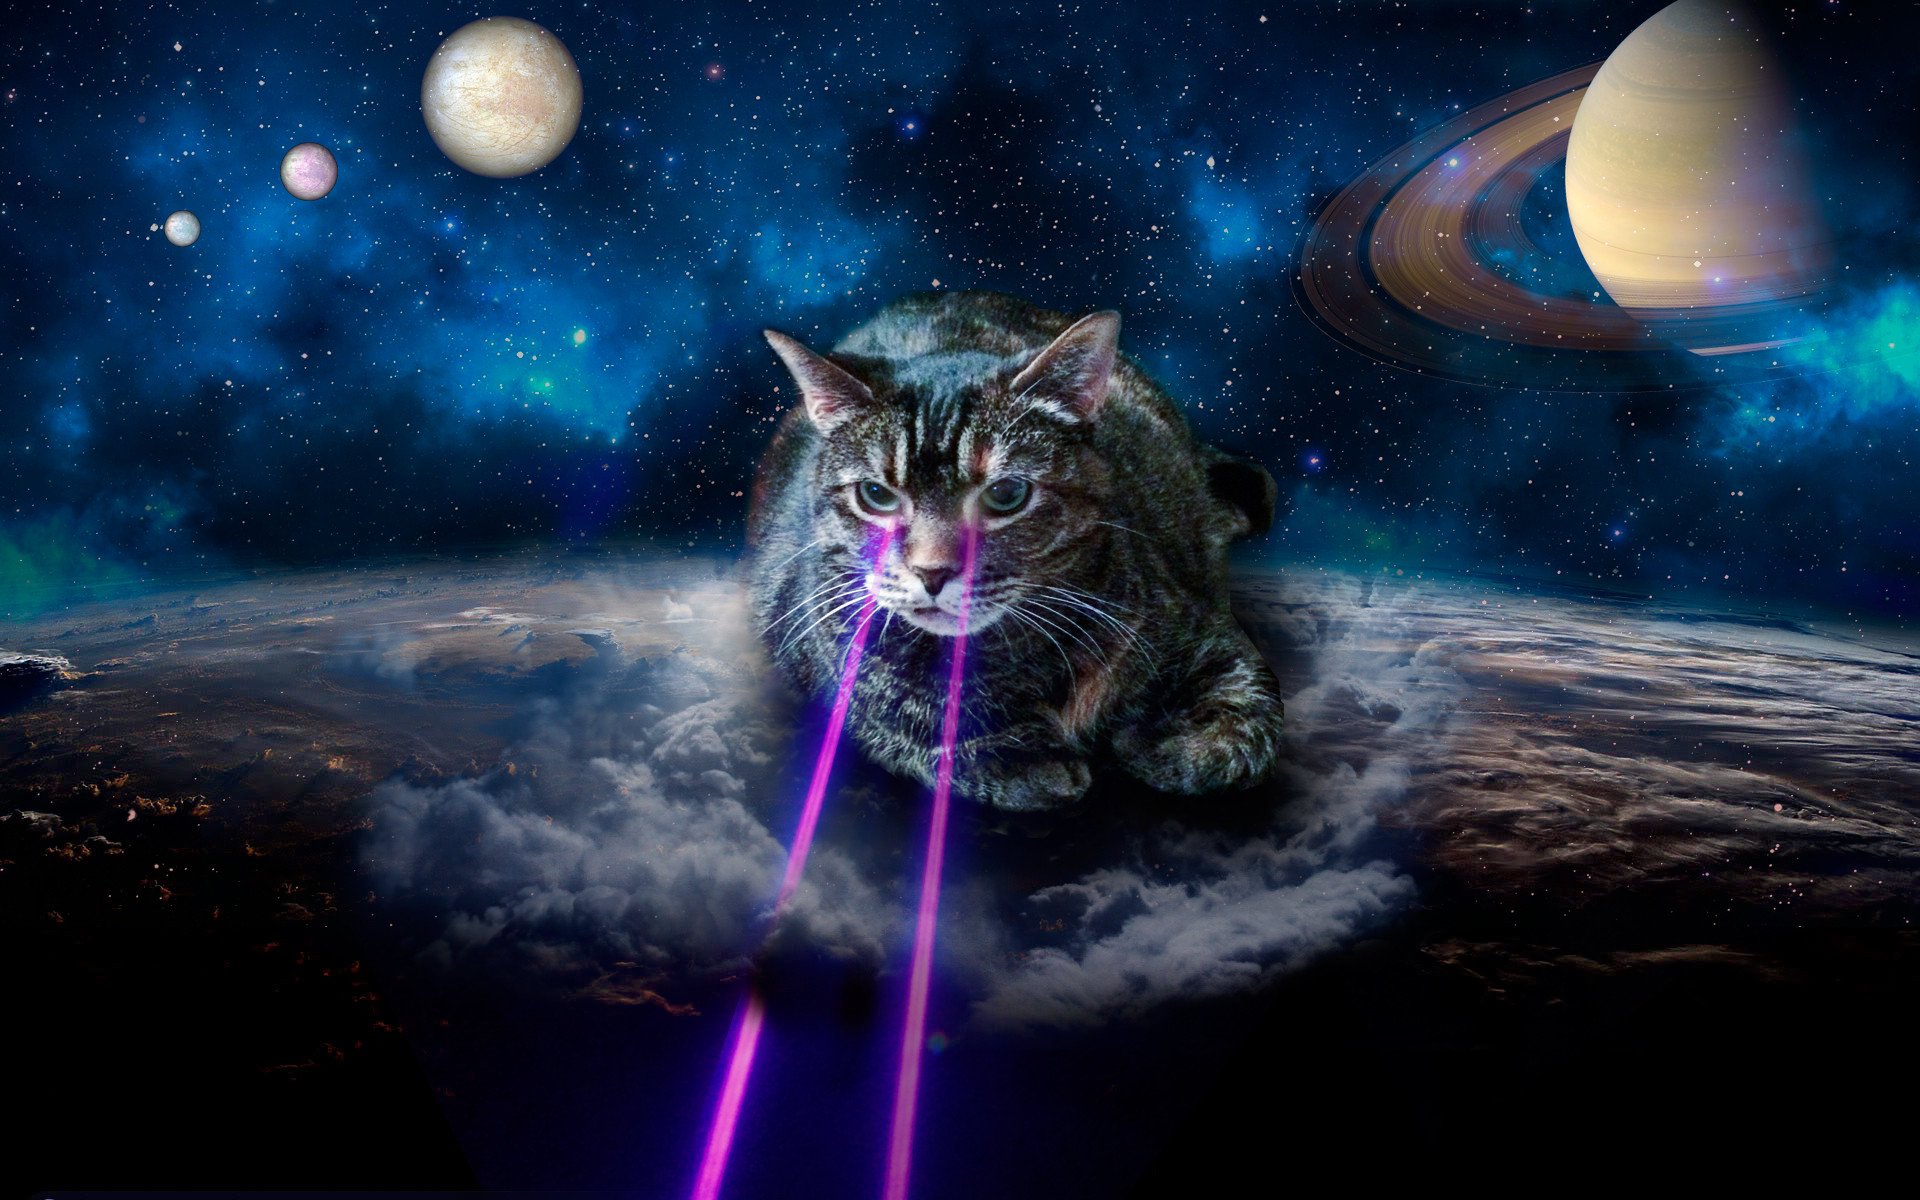 Space Cat iPhone Wallpaper